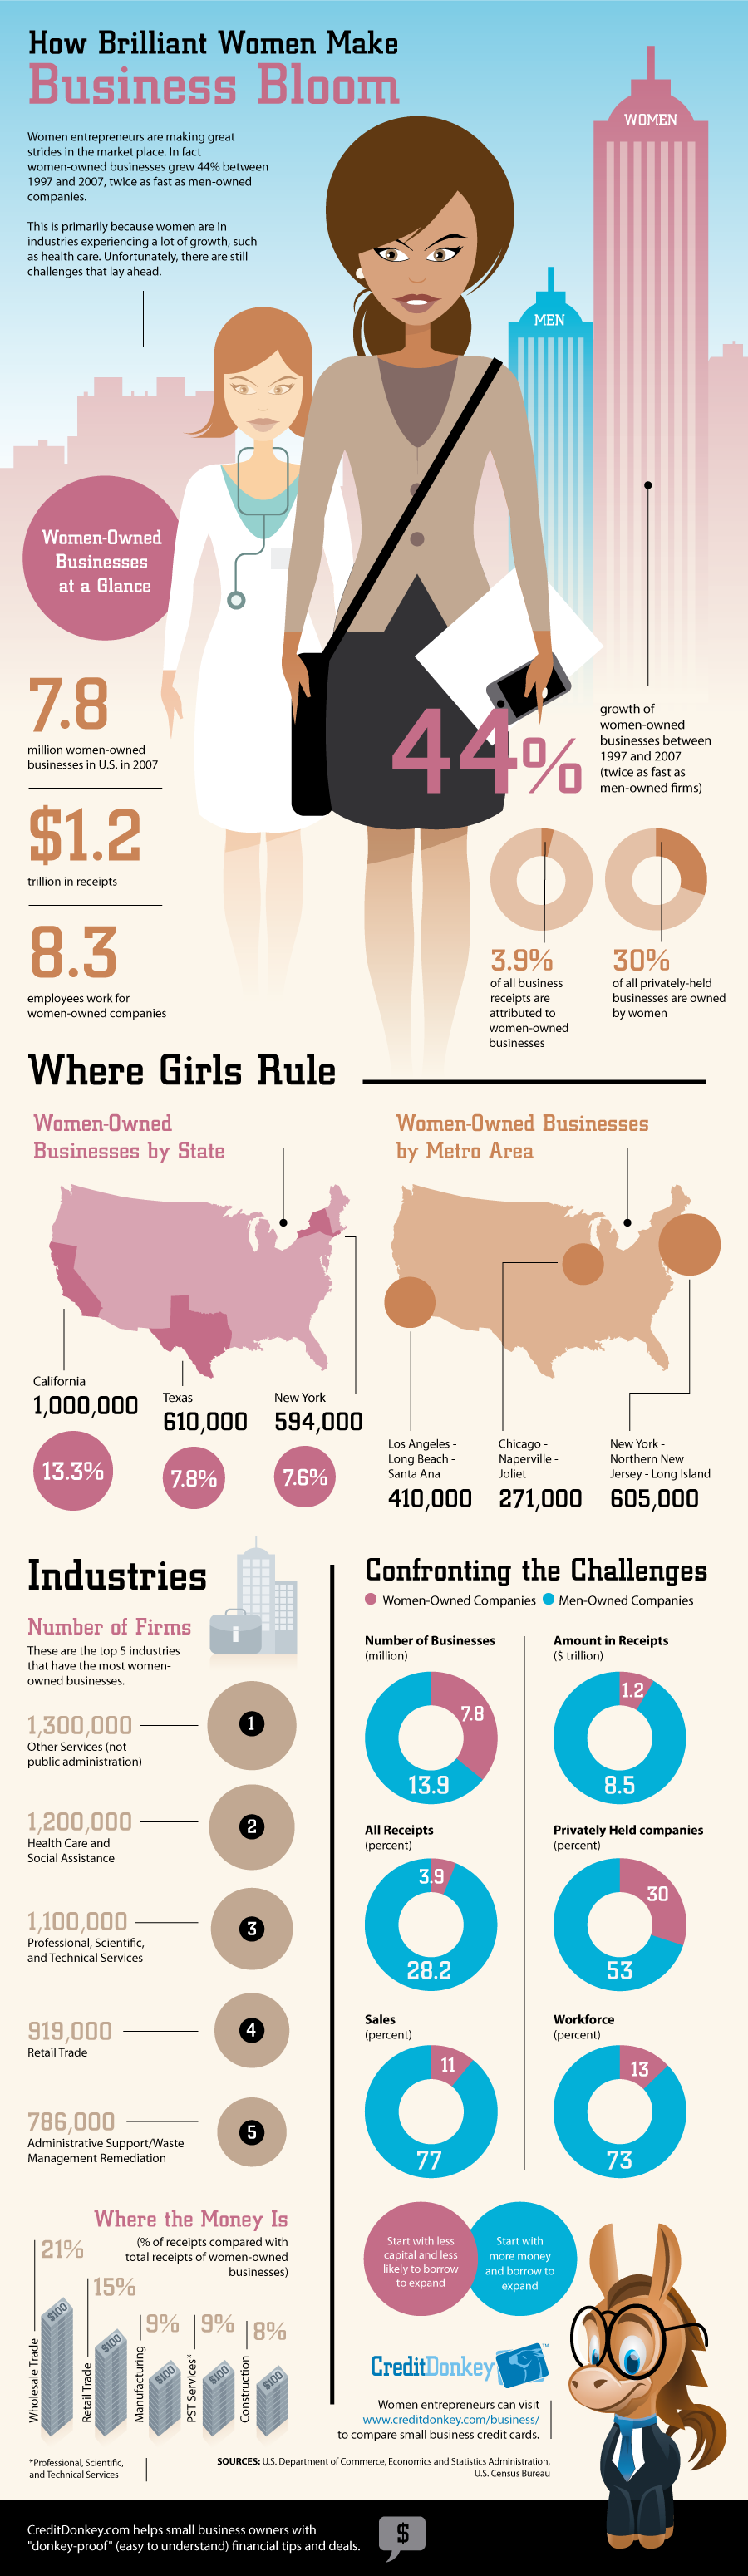 b"7 Infographics to Celebrate International Womens Day"